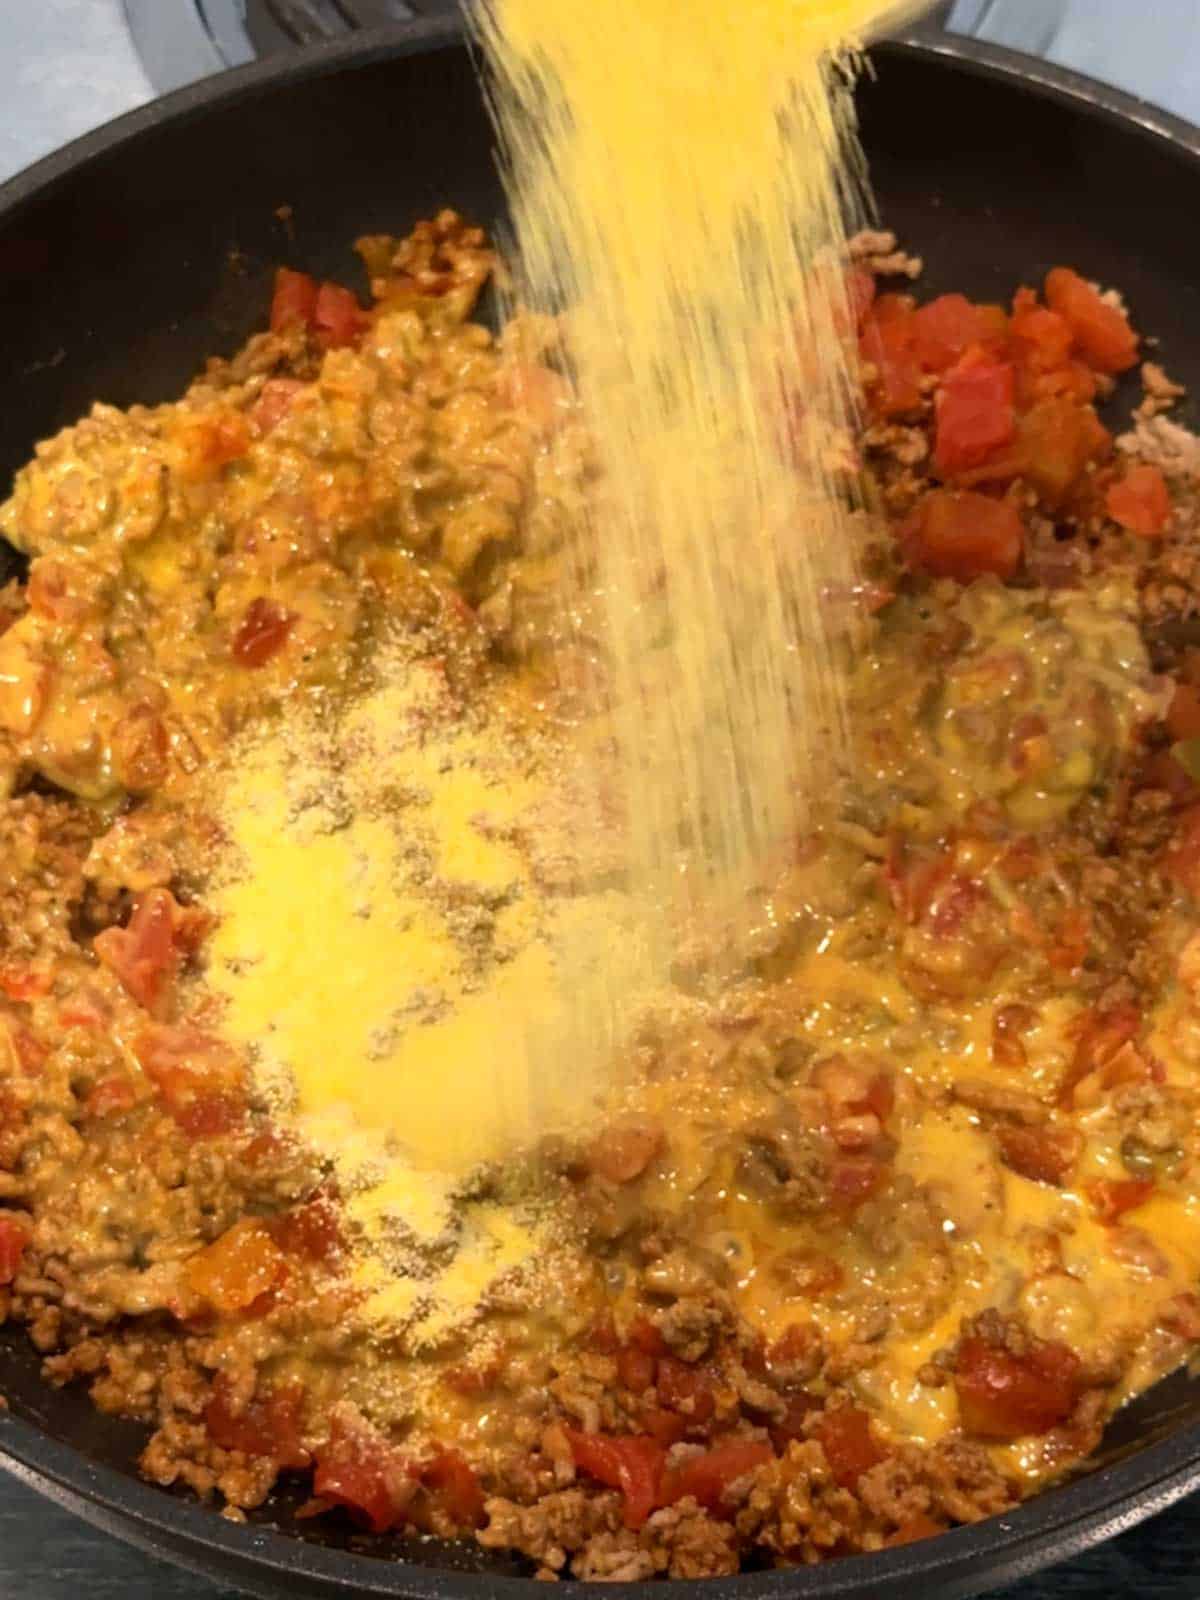 Adding cornmeal to the taco meat with Velveeta cheese.